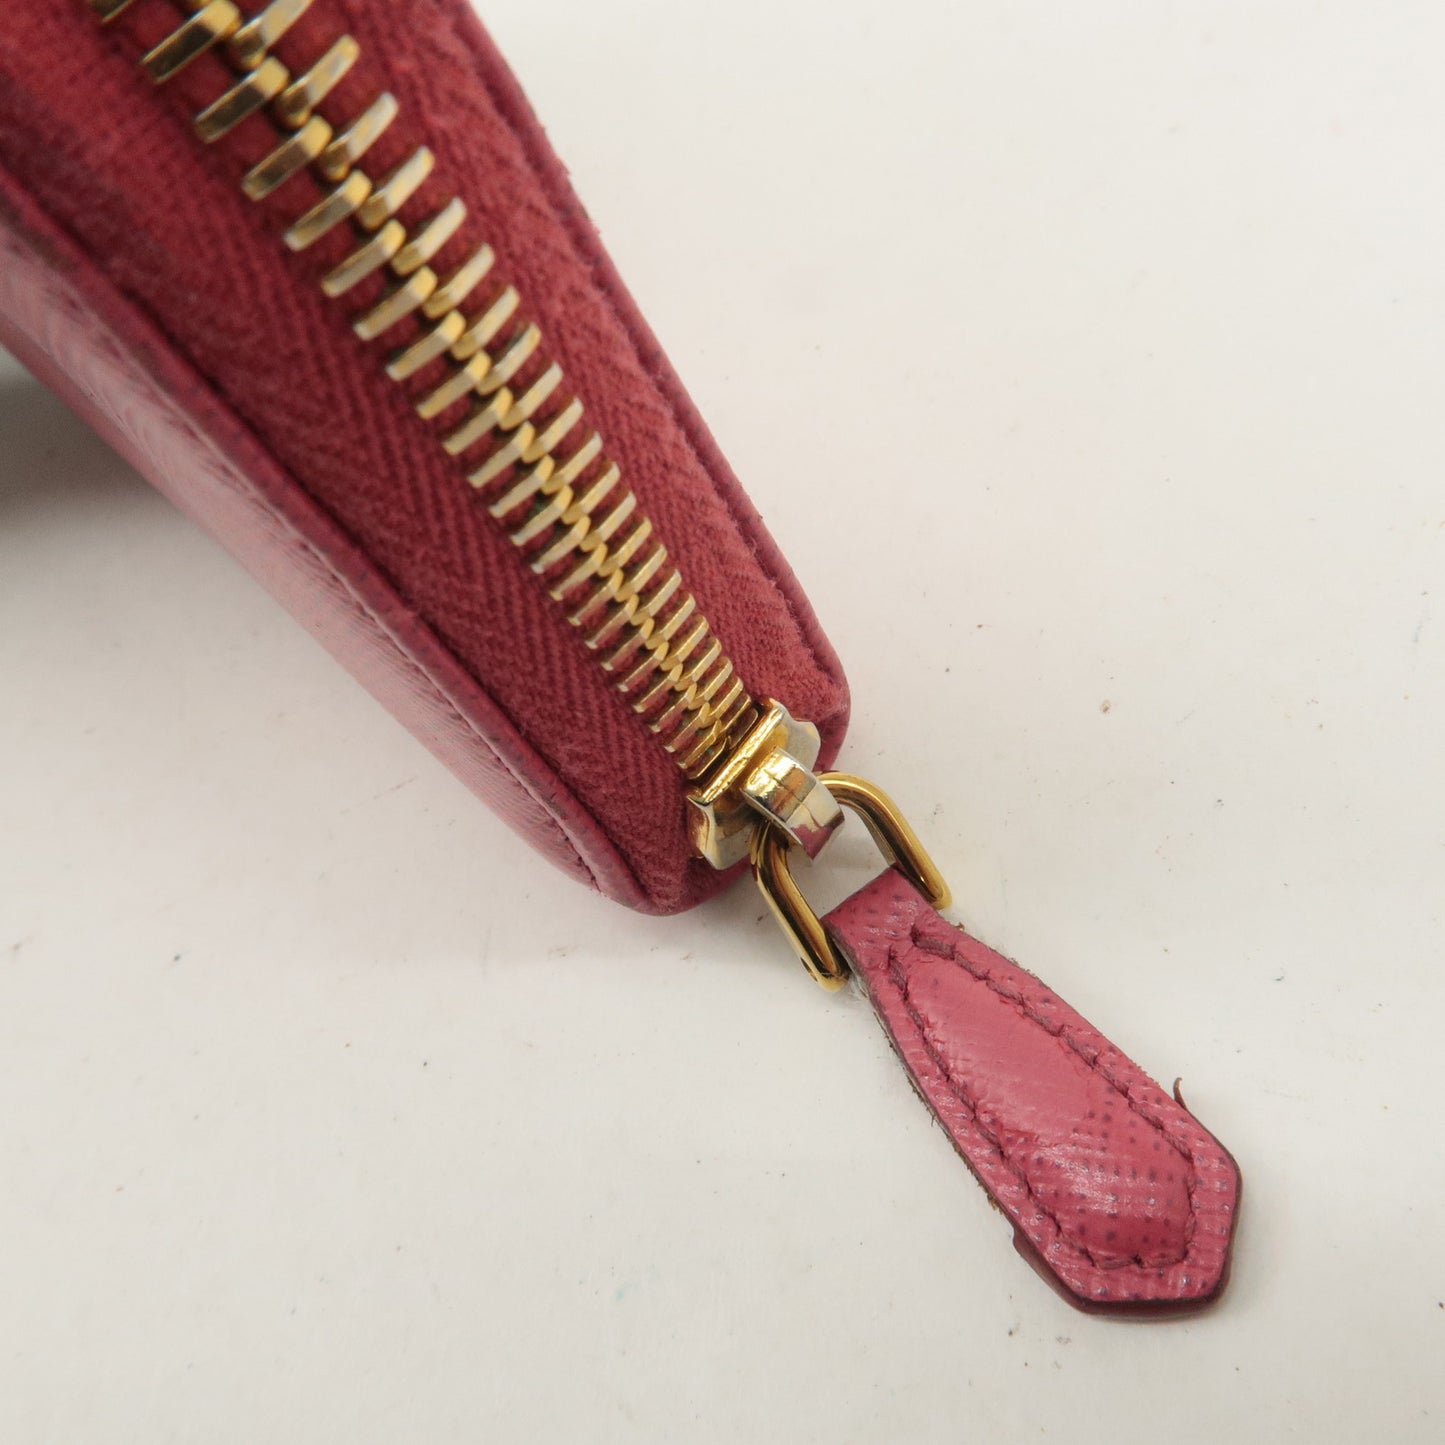 PRADA Logo Saffiano Leather Round Zipper Small Wallet Pink 1MM268